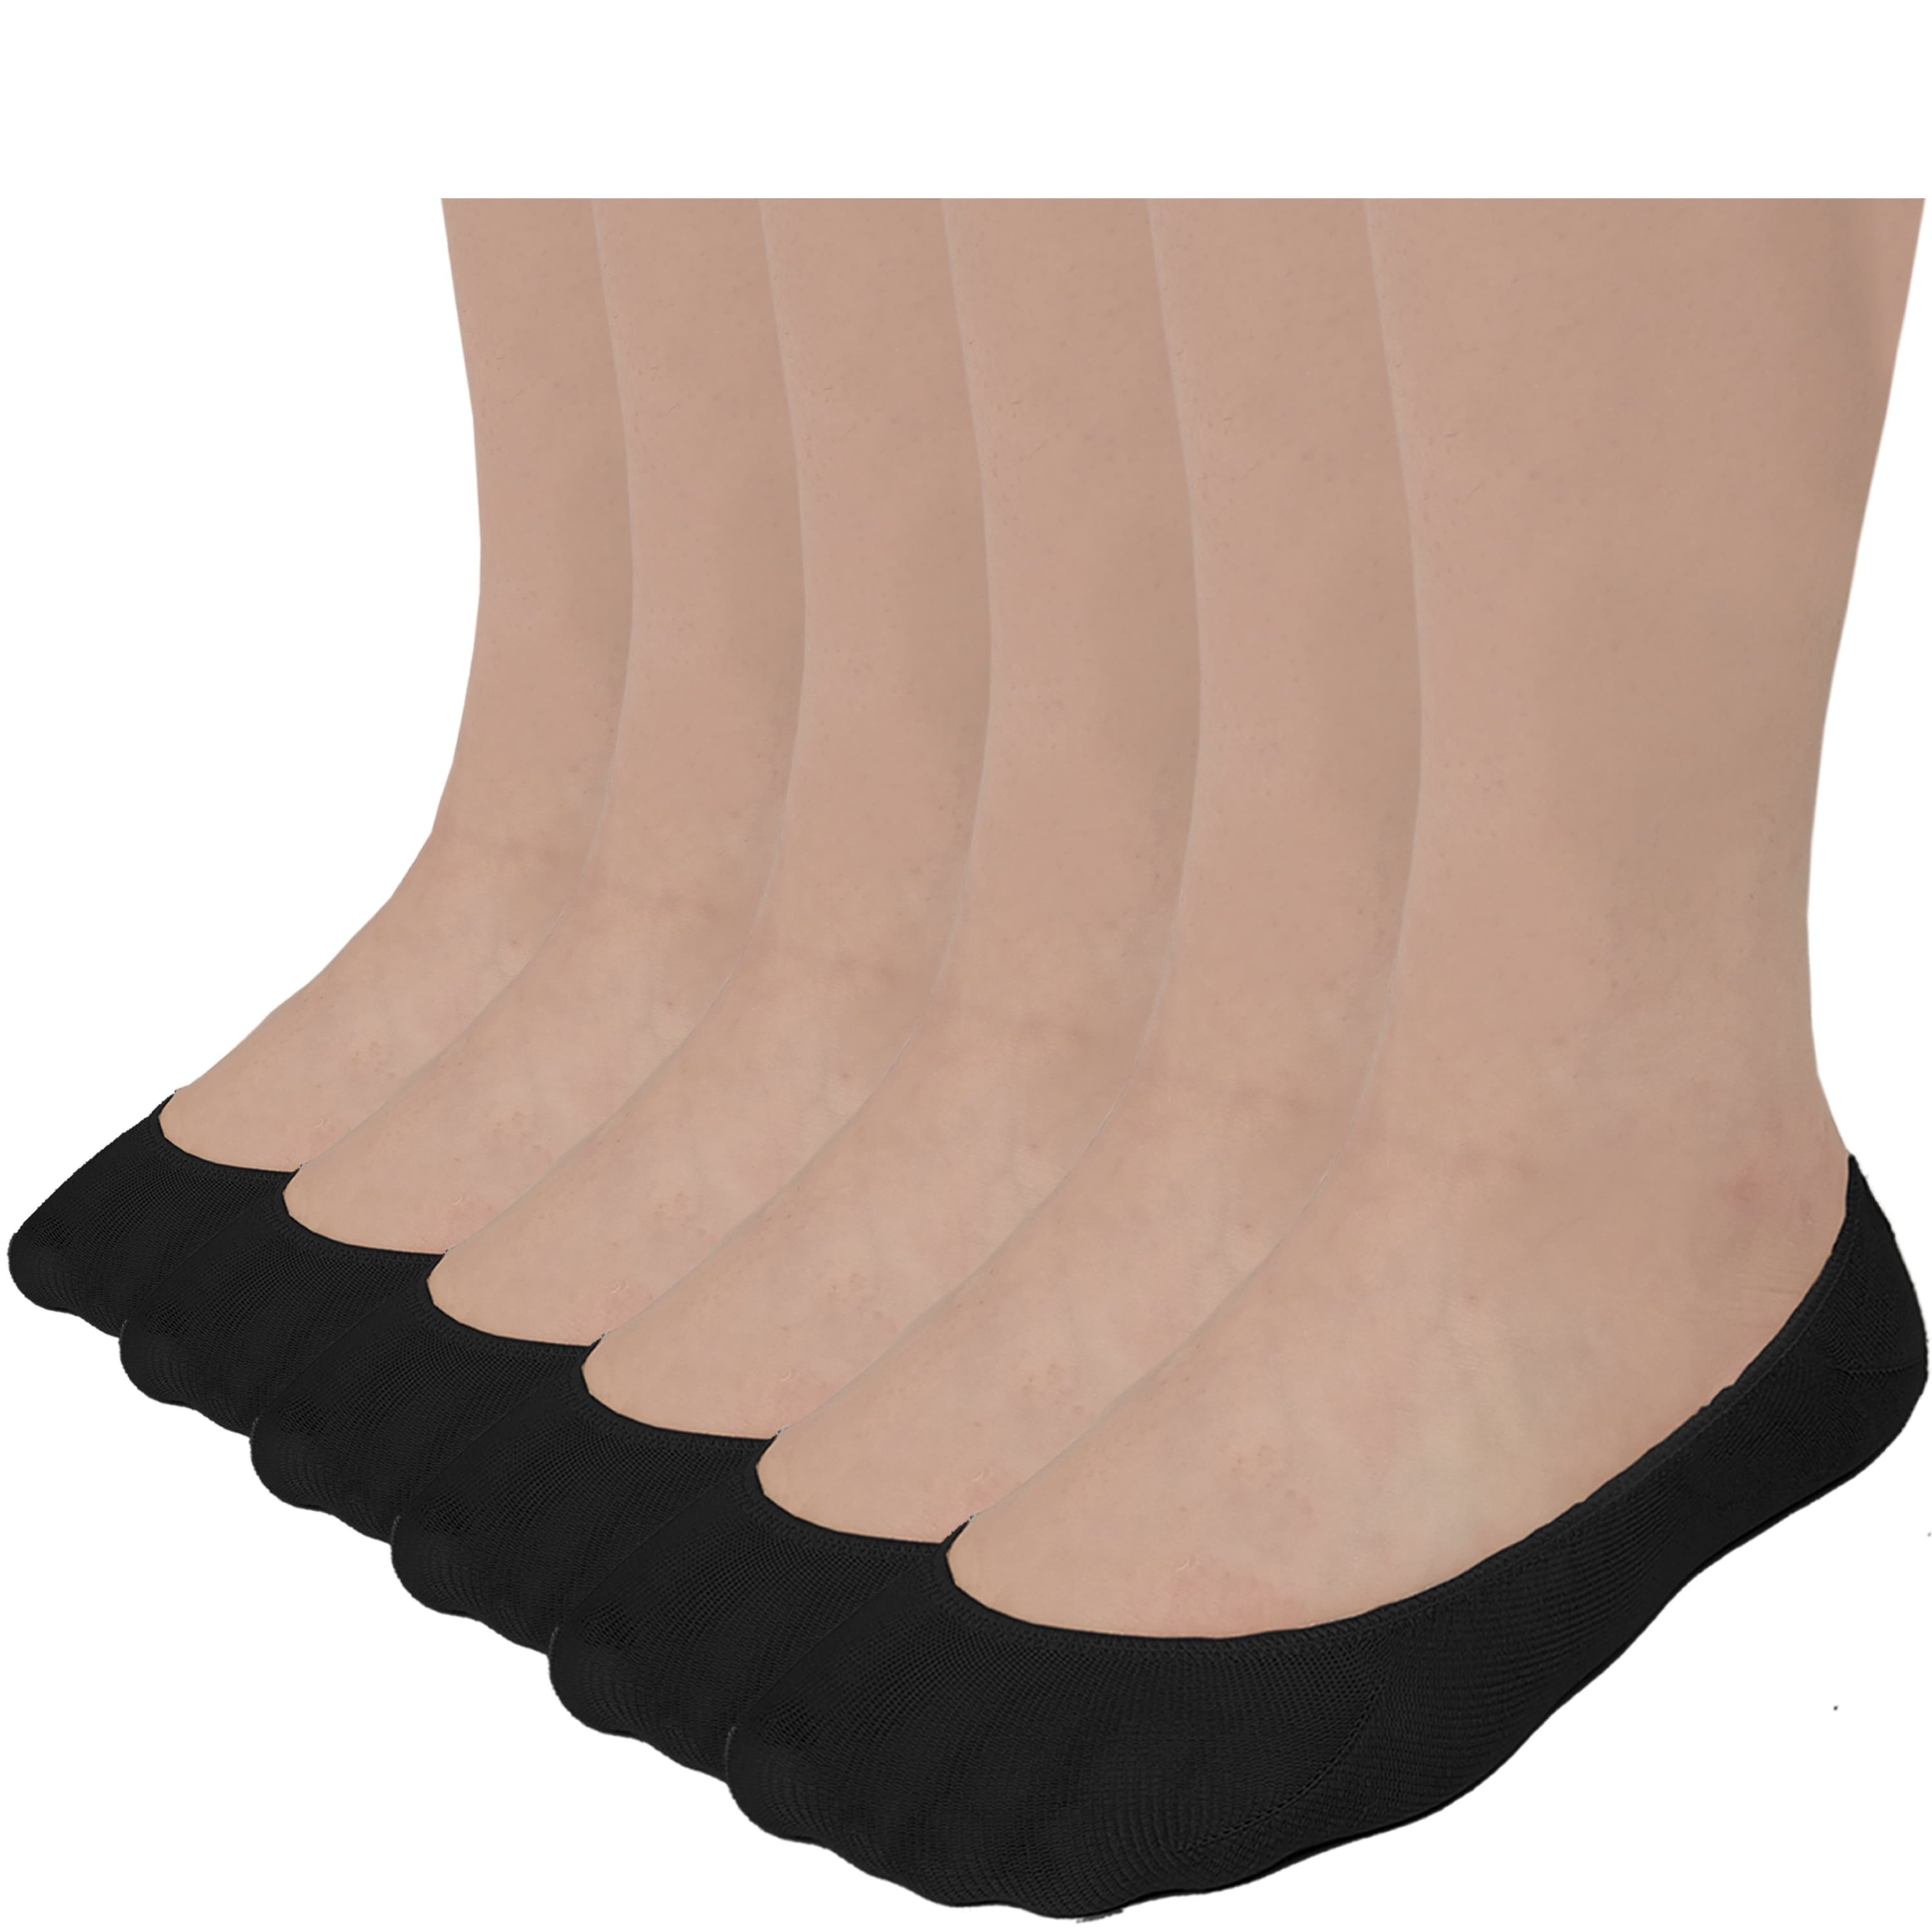 8 Pairs No Show Socks Women Non Slip Ultra Low Cut Casual Socks Women's No Show & Liner Socks with 3 Non Slip Grip 